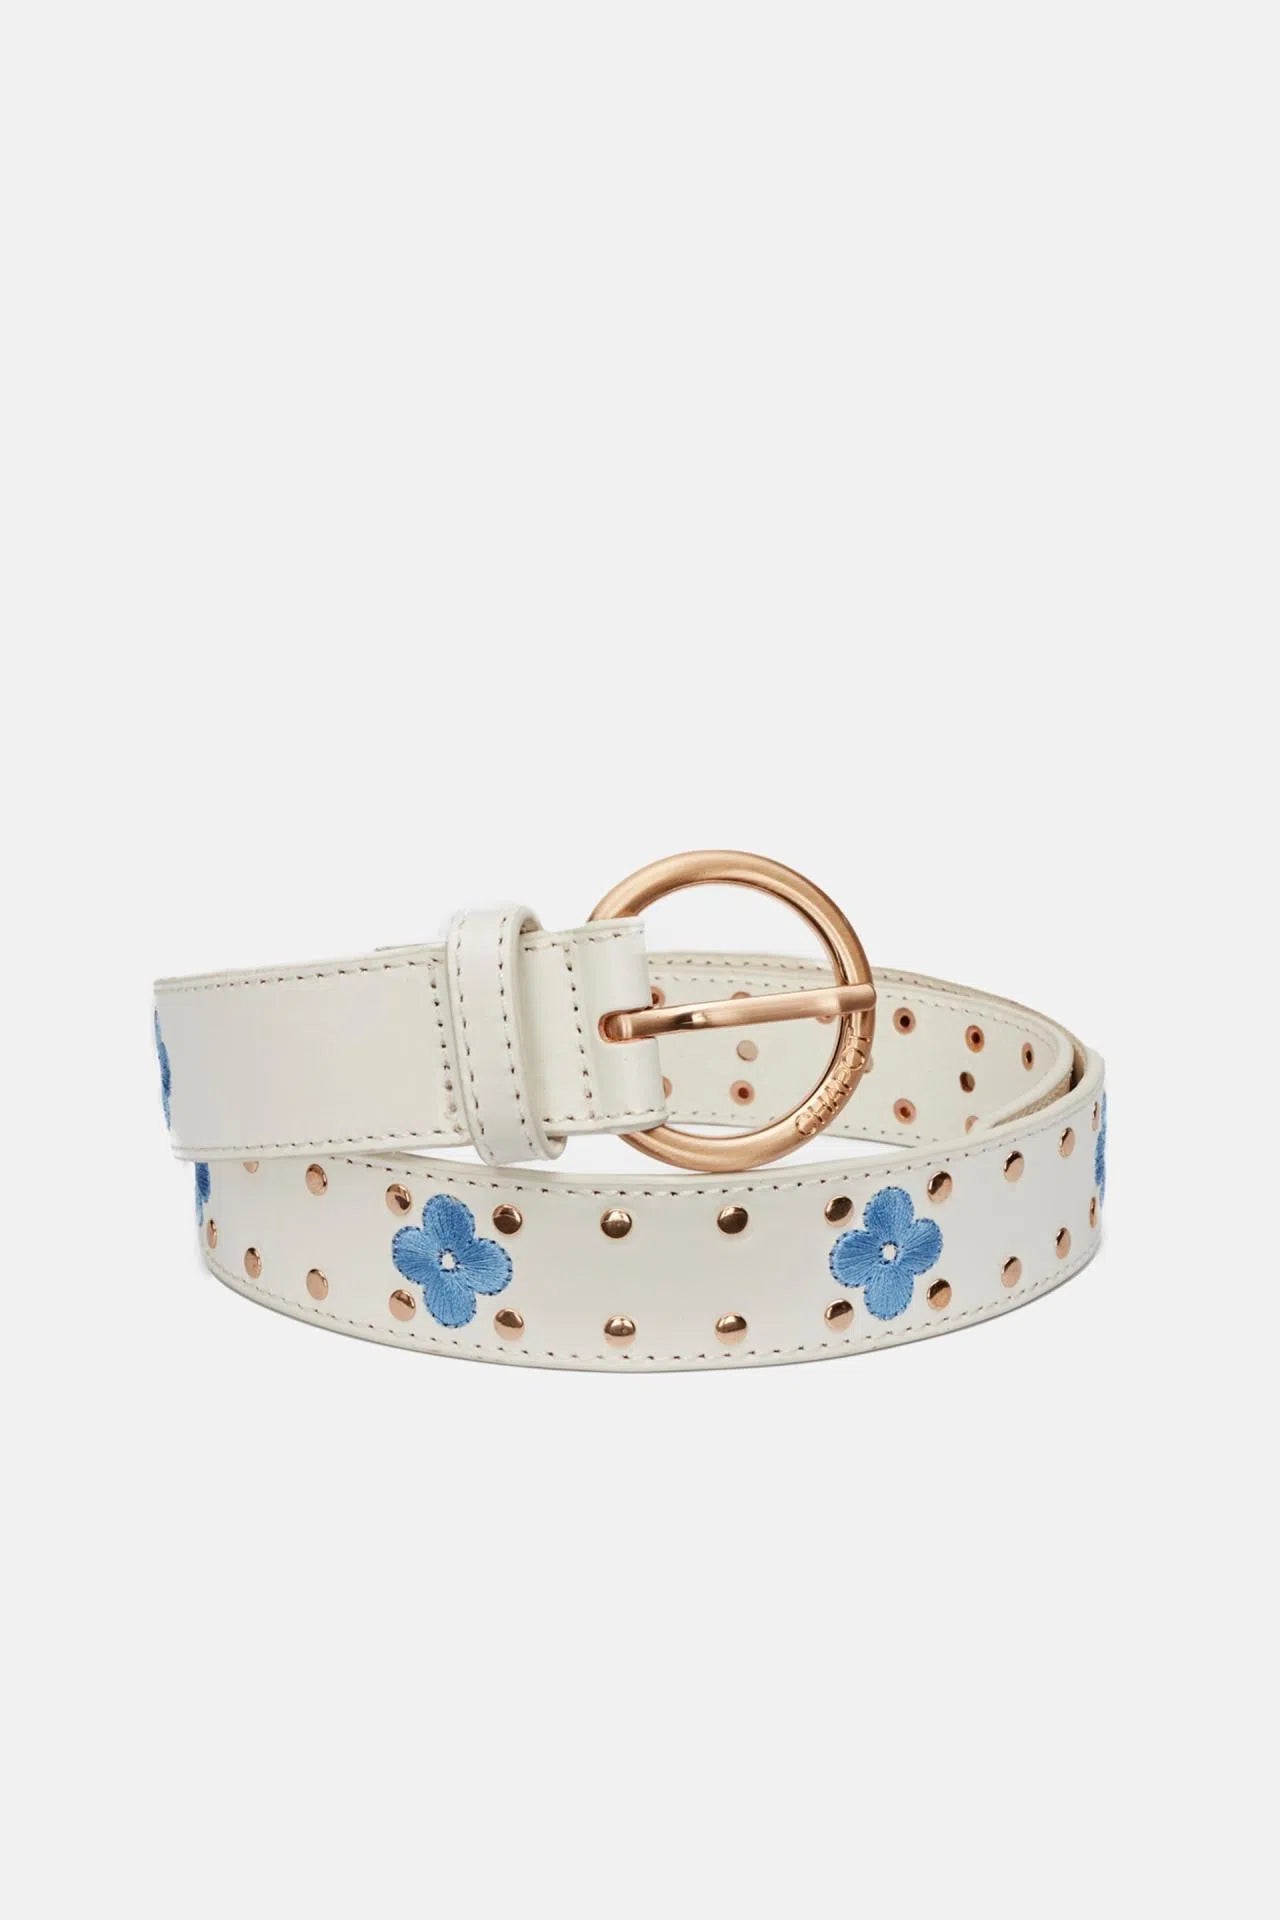 Fabienne Chapot Treboli studded belt - Cream White / RIad Blue